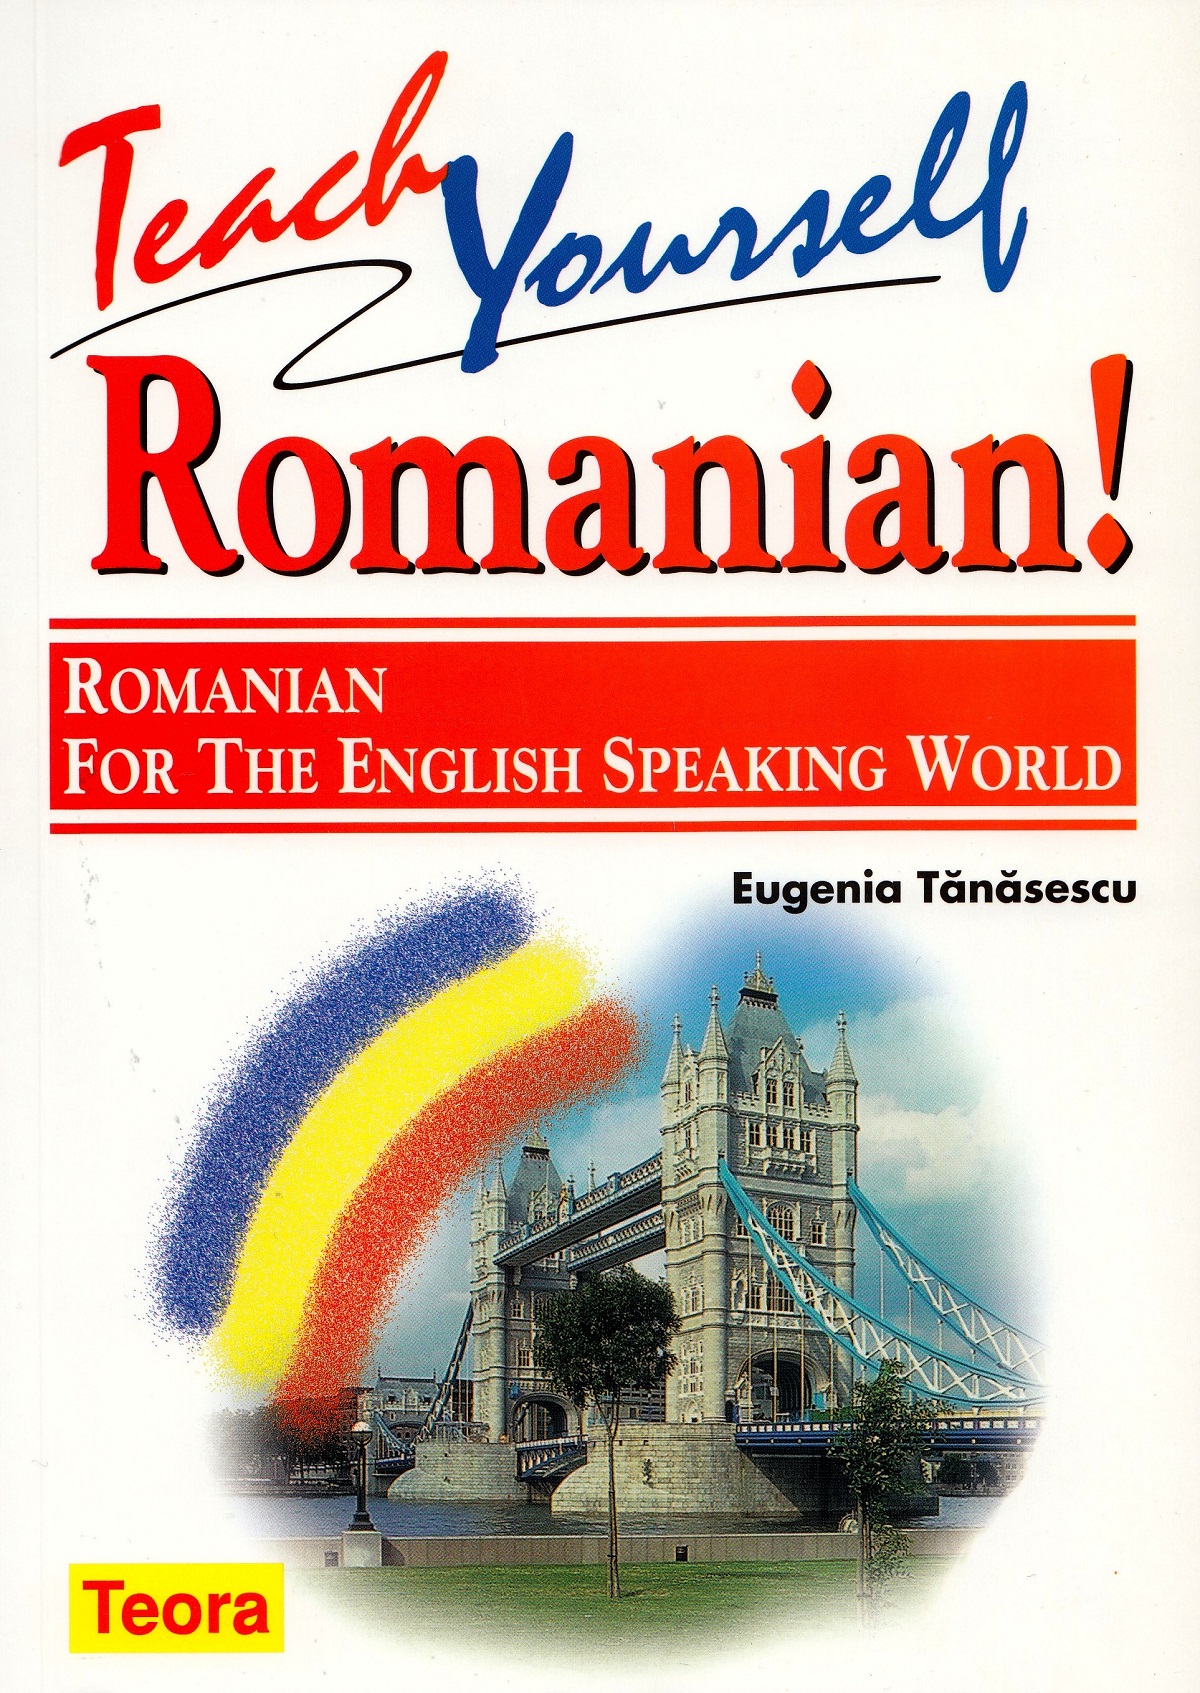 Teach yourself romanian! Romanian for the english speacking world - Eugenia Tanasescu